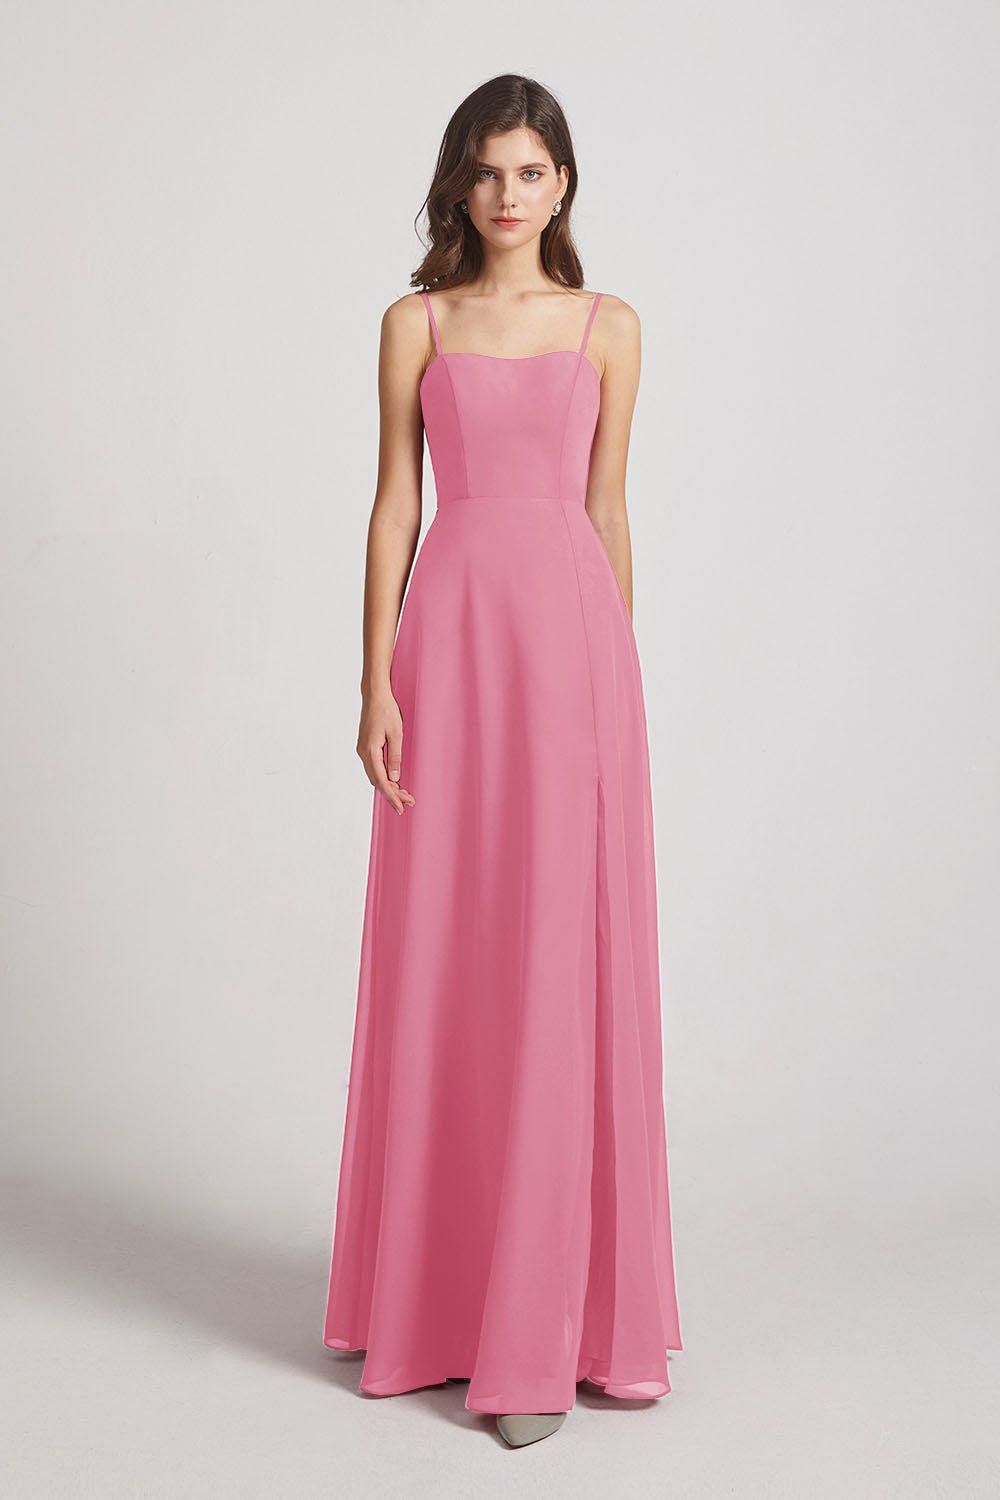 Alfa Bridal Skin Pink Spaghetti Straps Long Chiffon Bridesmaid Dresses with Side Slit (AF0112)